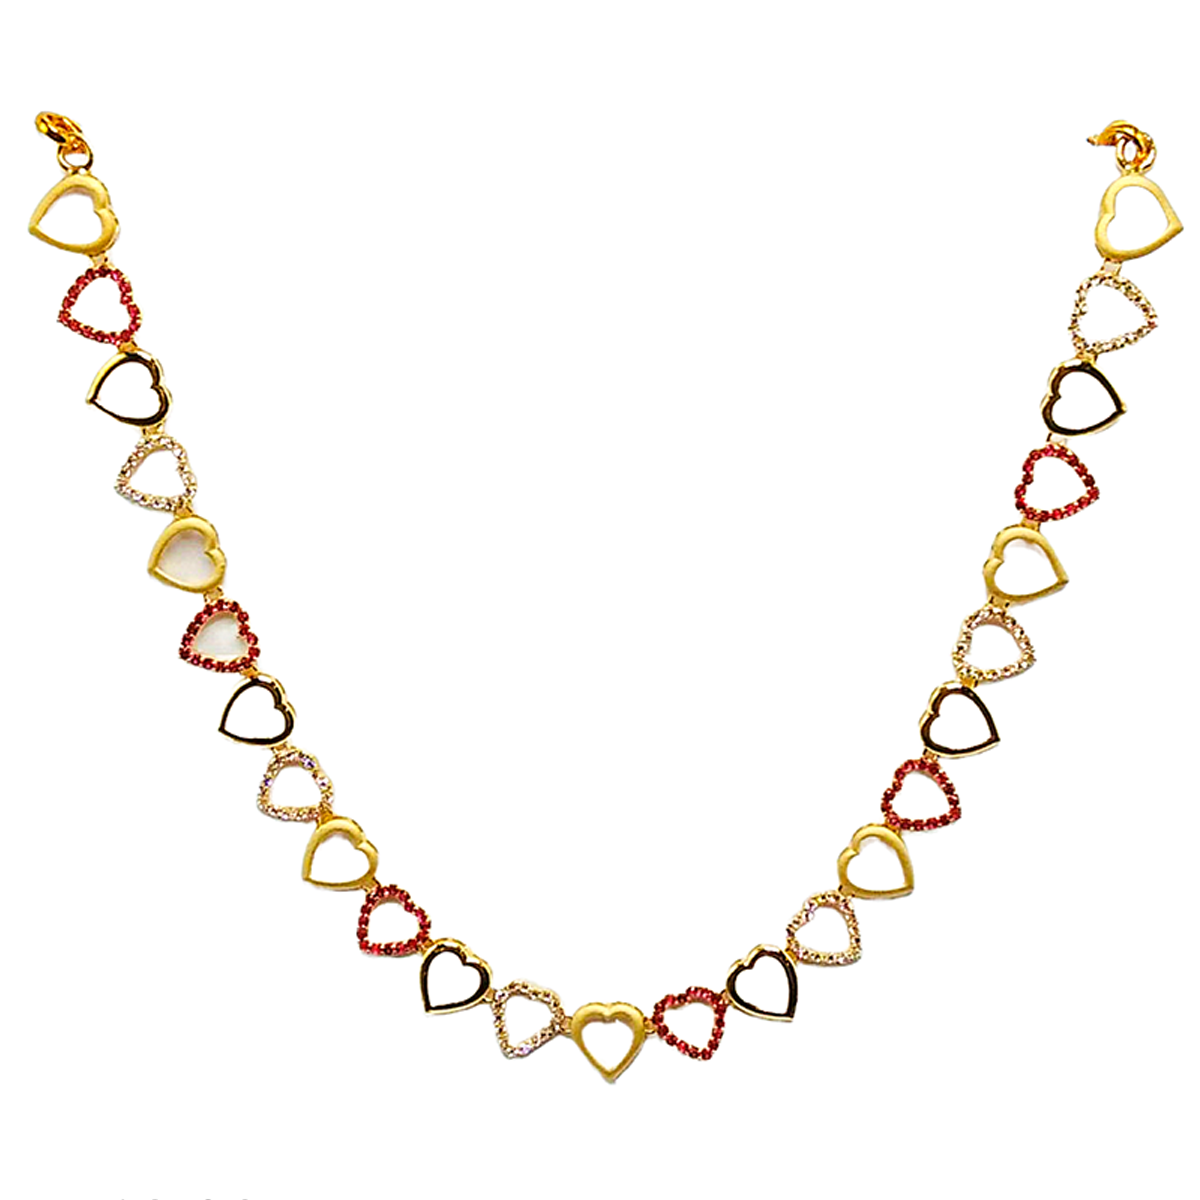 Padmaja gold necklace